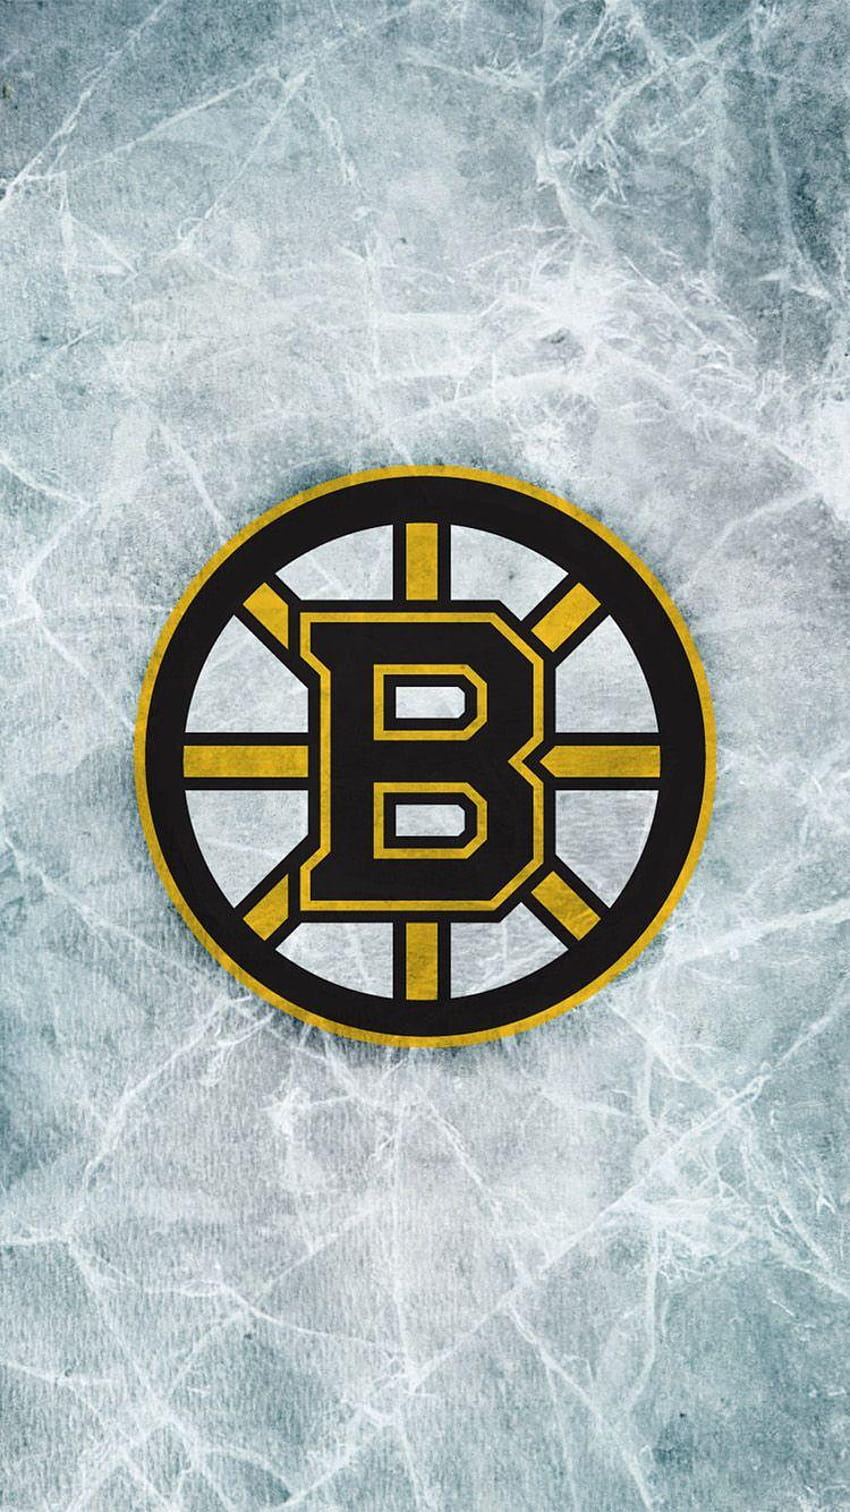 Download wallpapers 4k Boston Bruins grunge NHL hockey art Eastern  Conference USA logo stone   Boston bruins Boston bruins logo Boston bruins  wallpaper